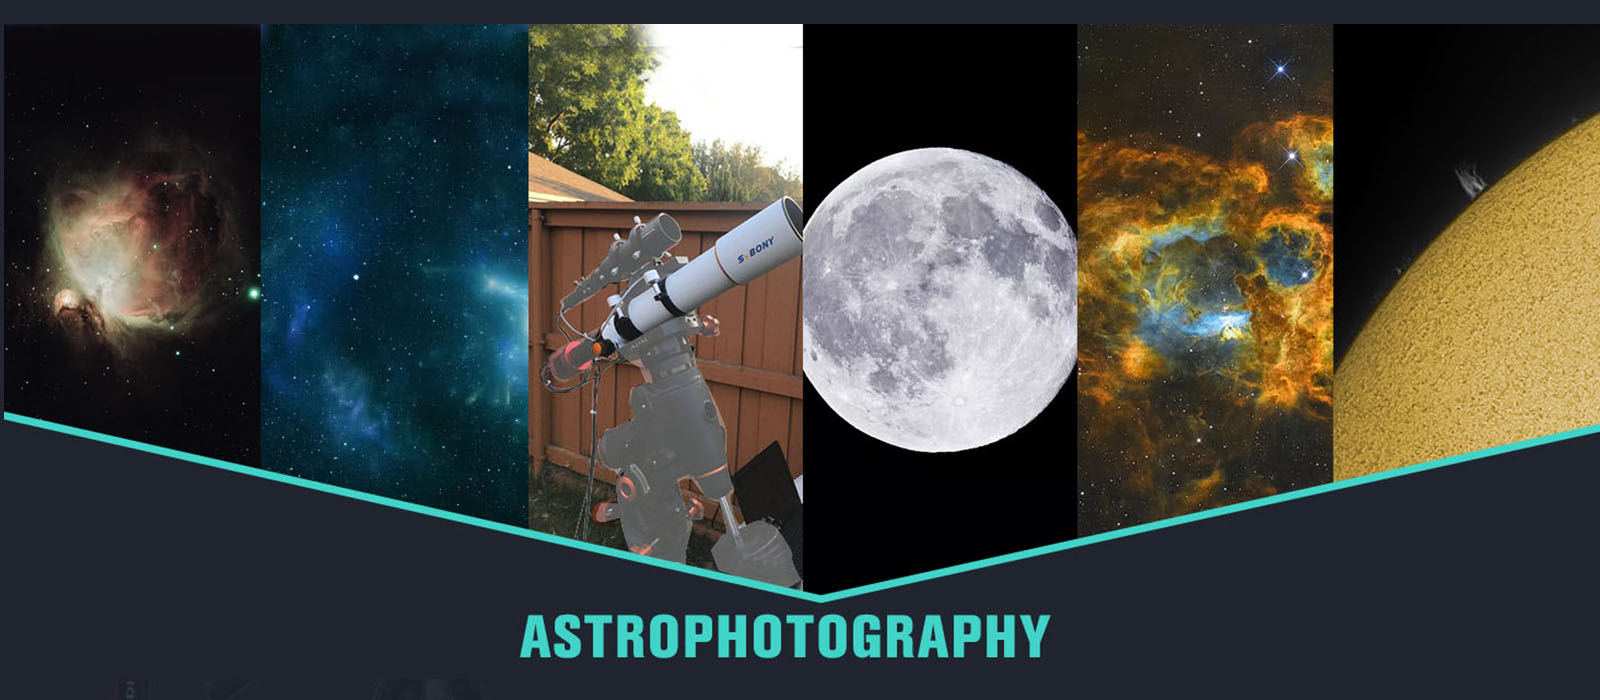 sv503 for astrophotography.jpg